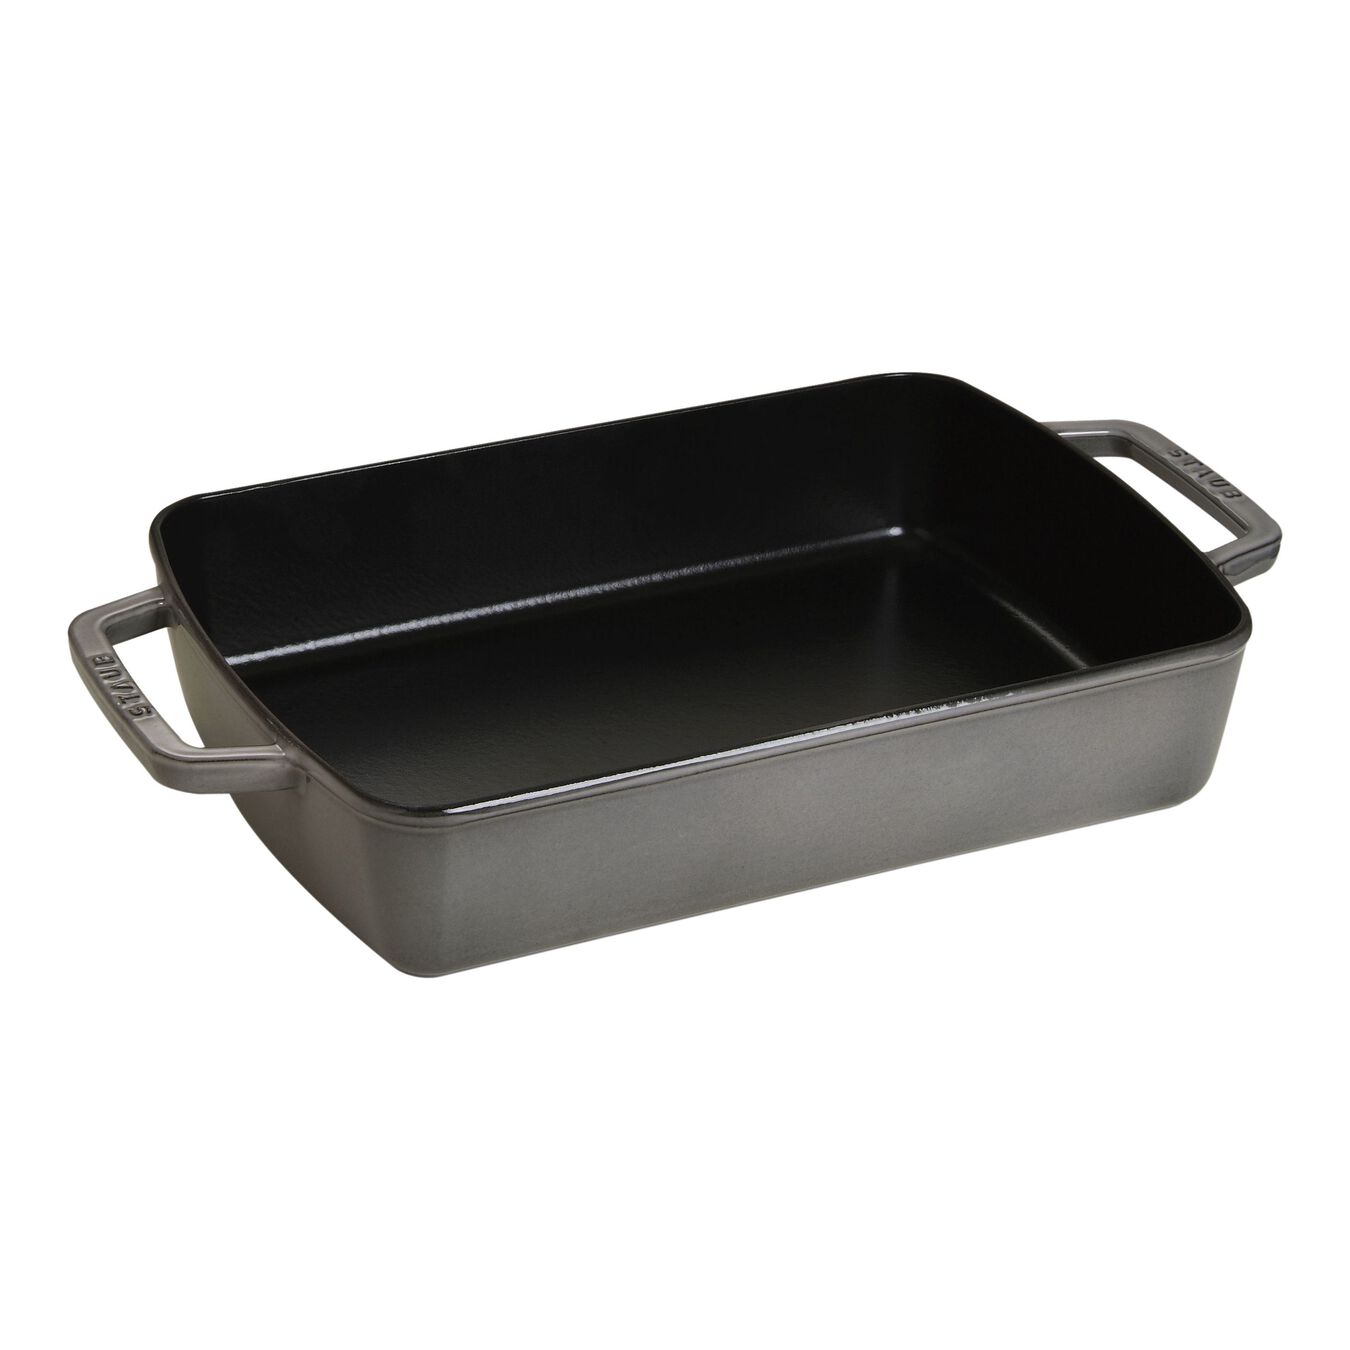 30 cm x 20 cm rectangular Cast iron Oven dish graphite-grey,,large 1